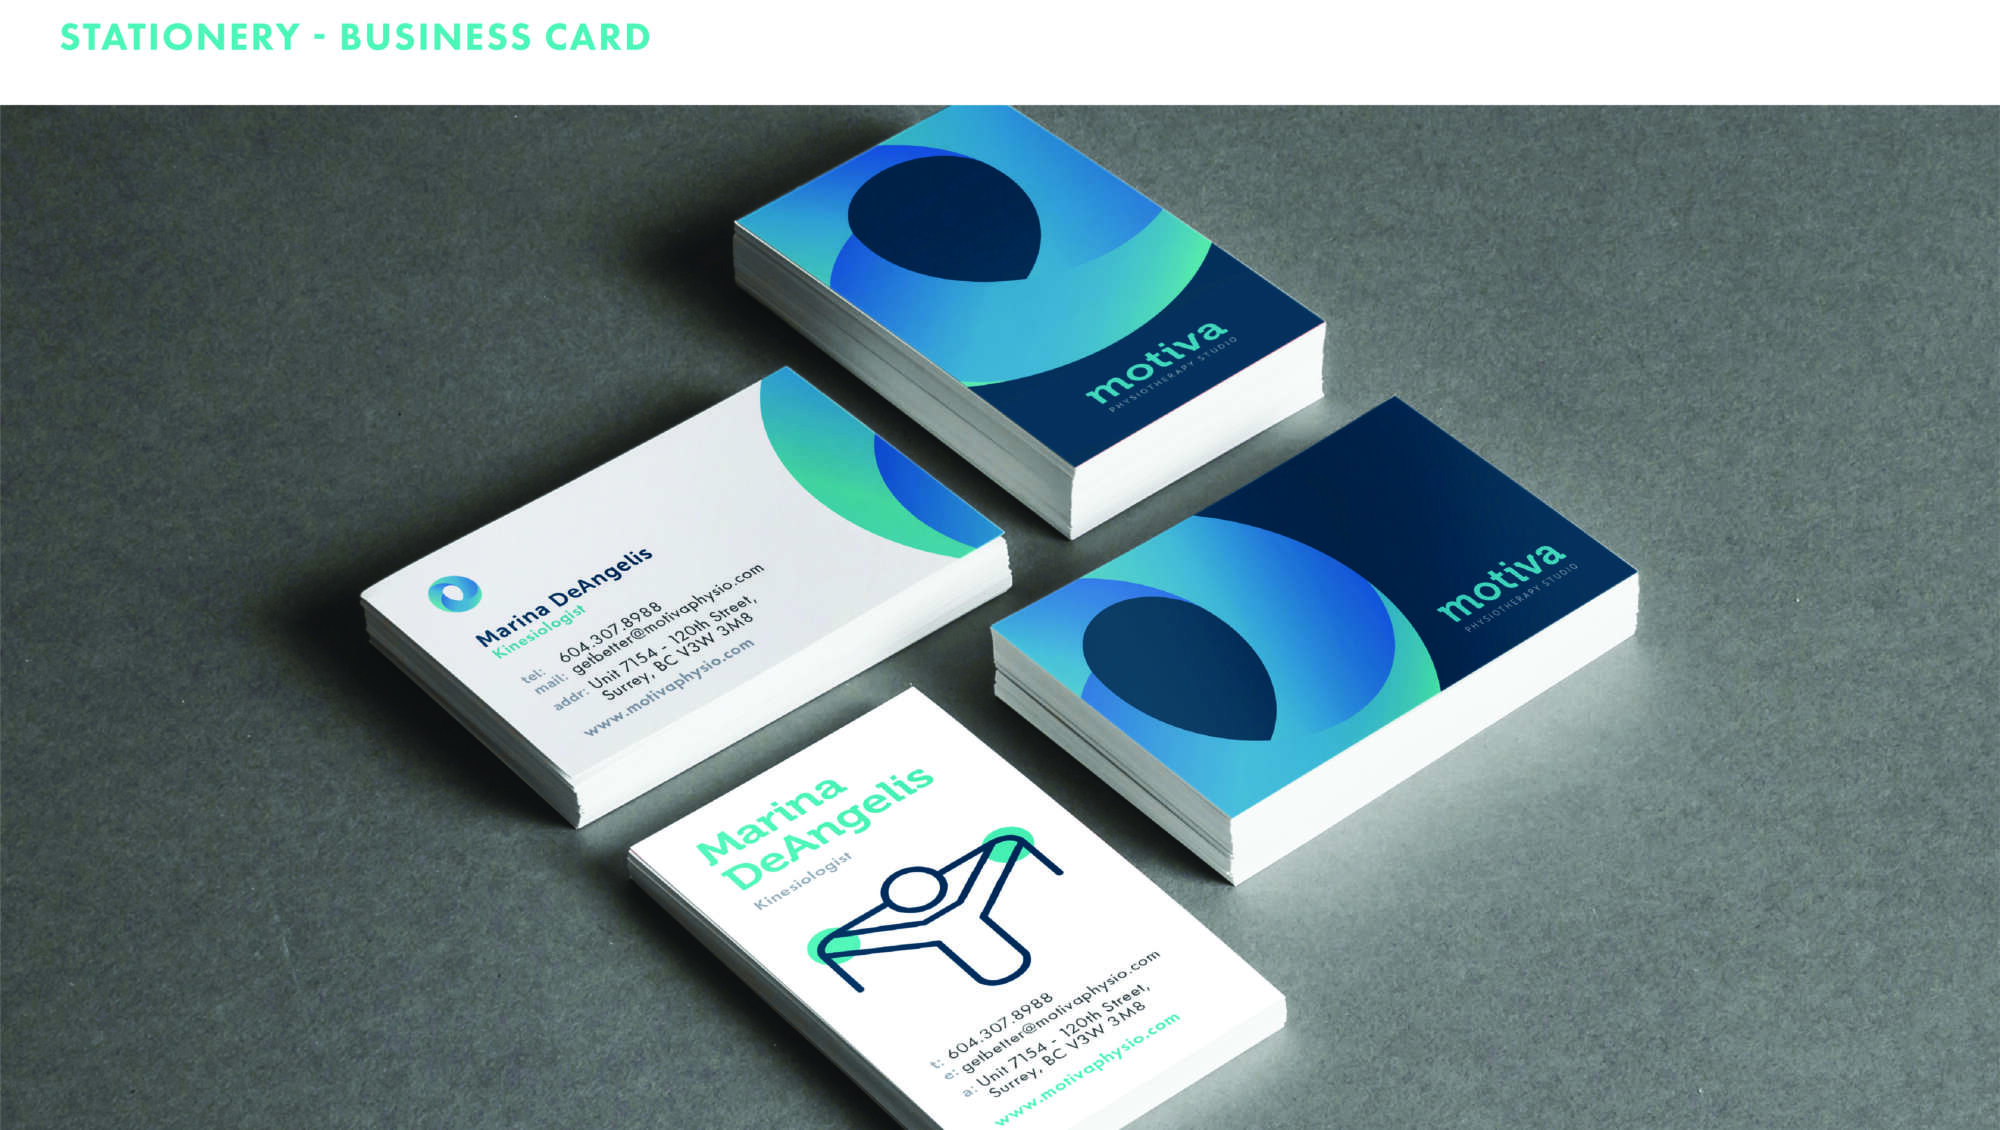 Motiva - Business Card